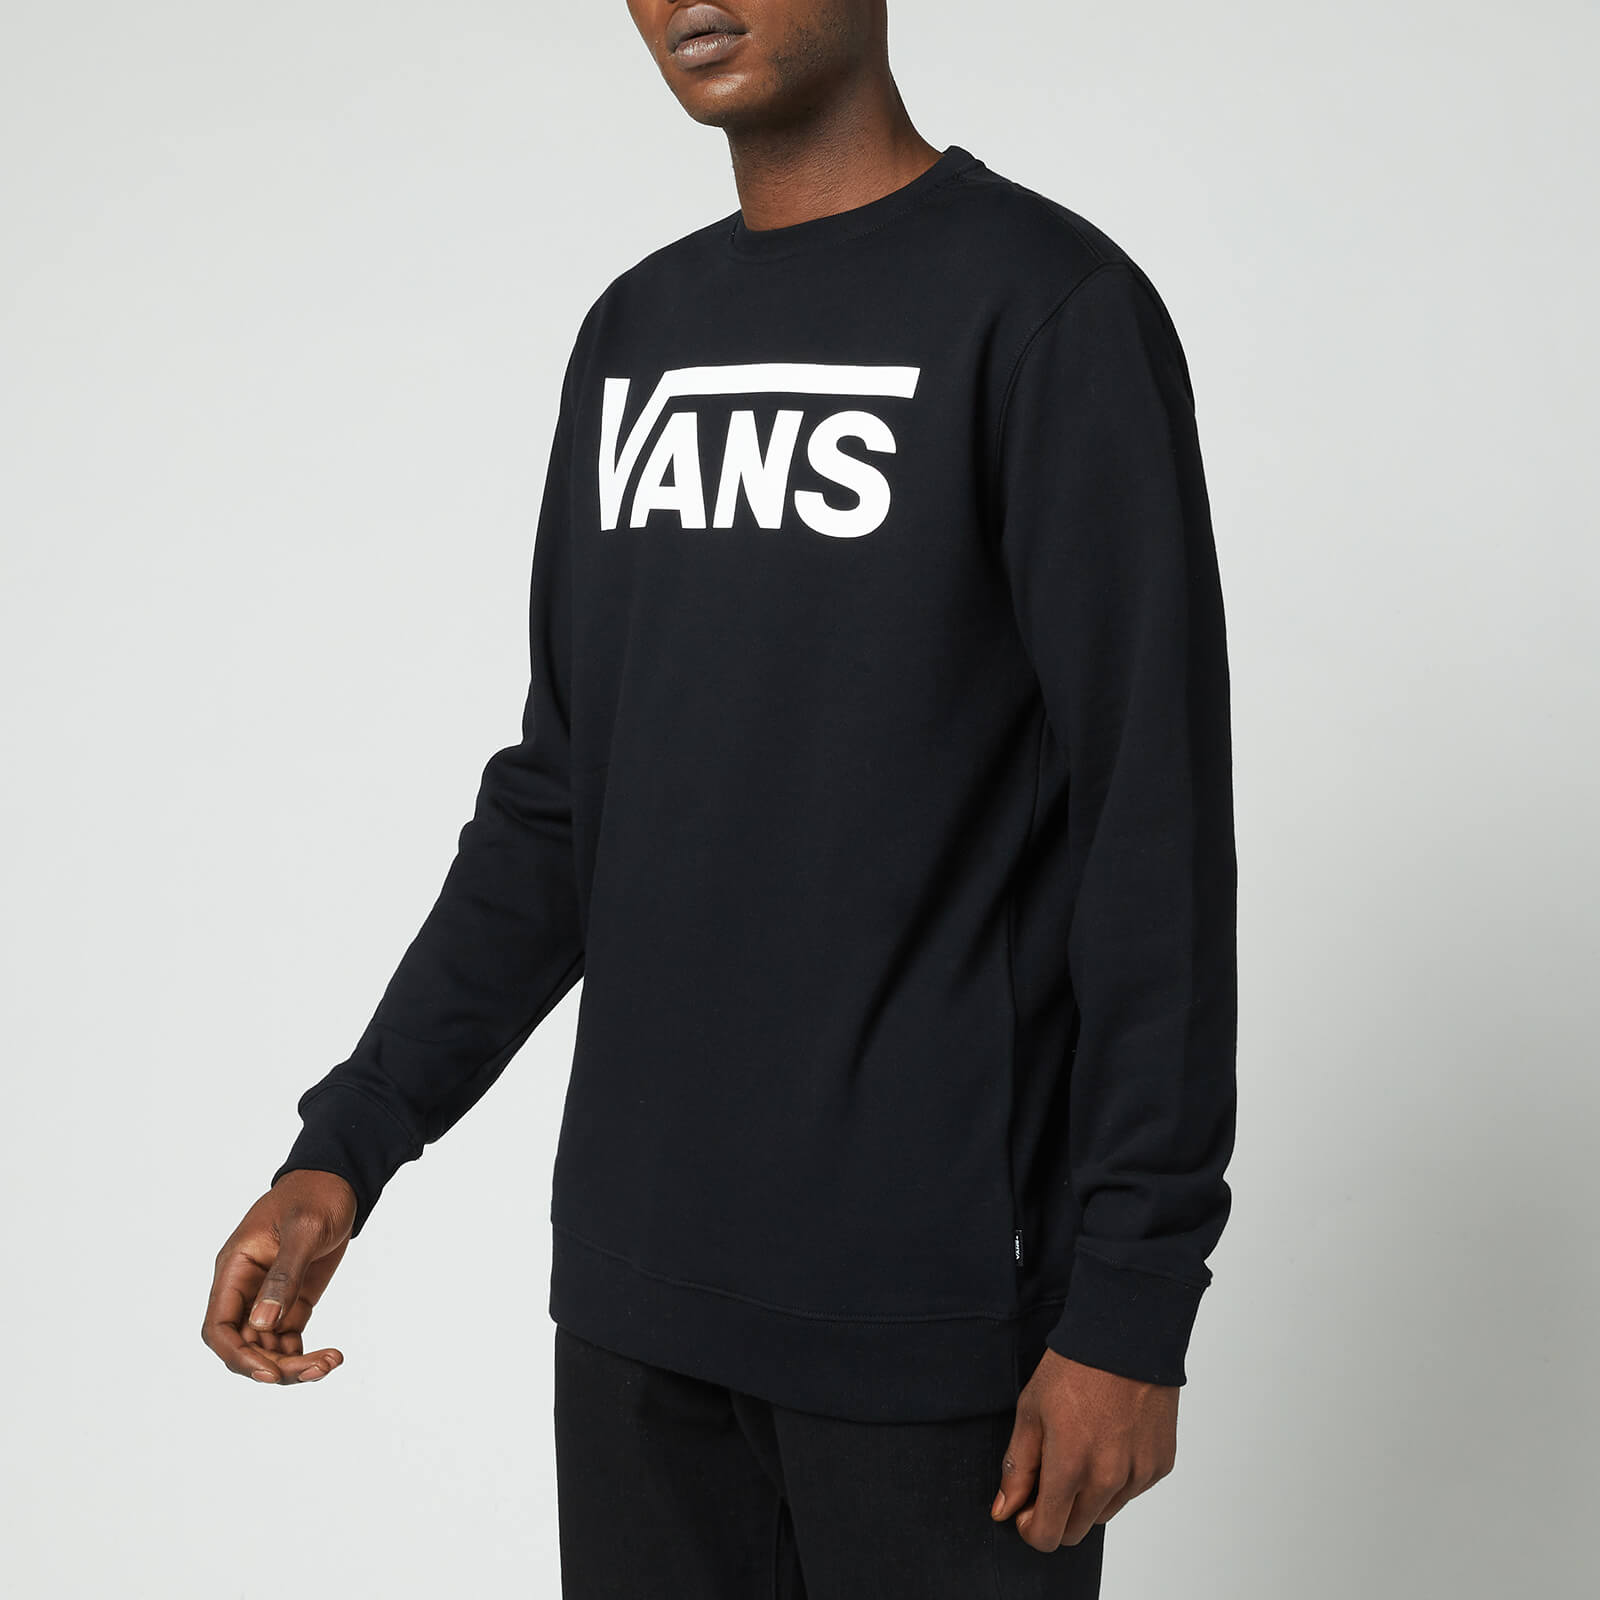 Vans Men's Classic Crewneck Sweatshirt - Black/White